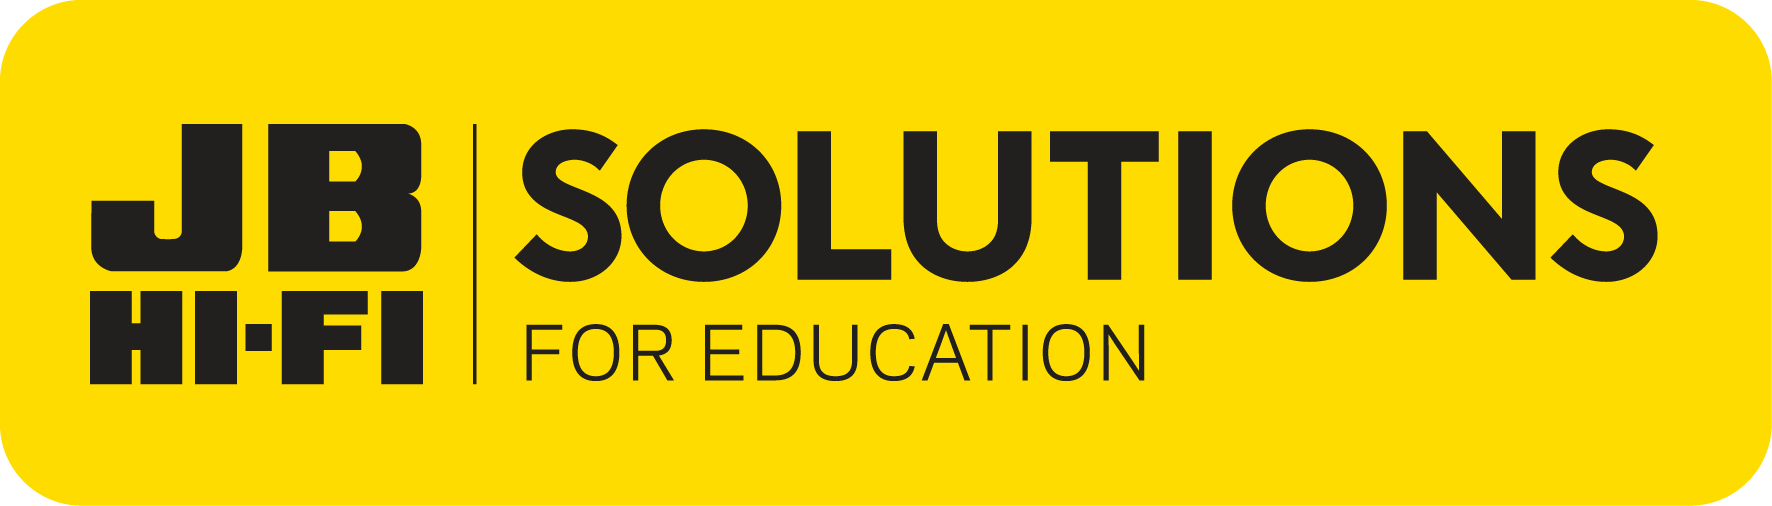 jb-education_logo.png